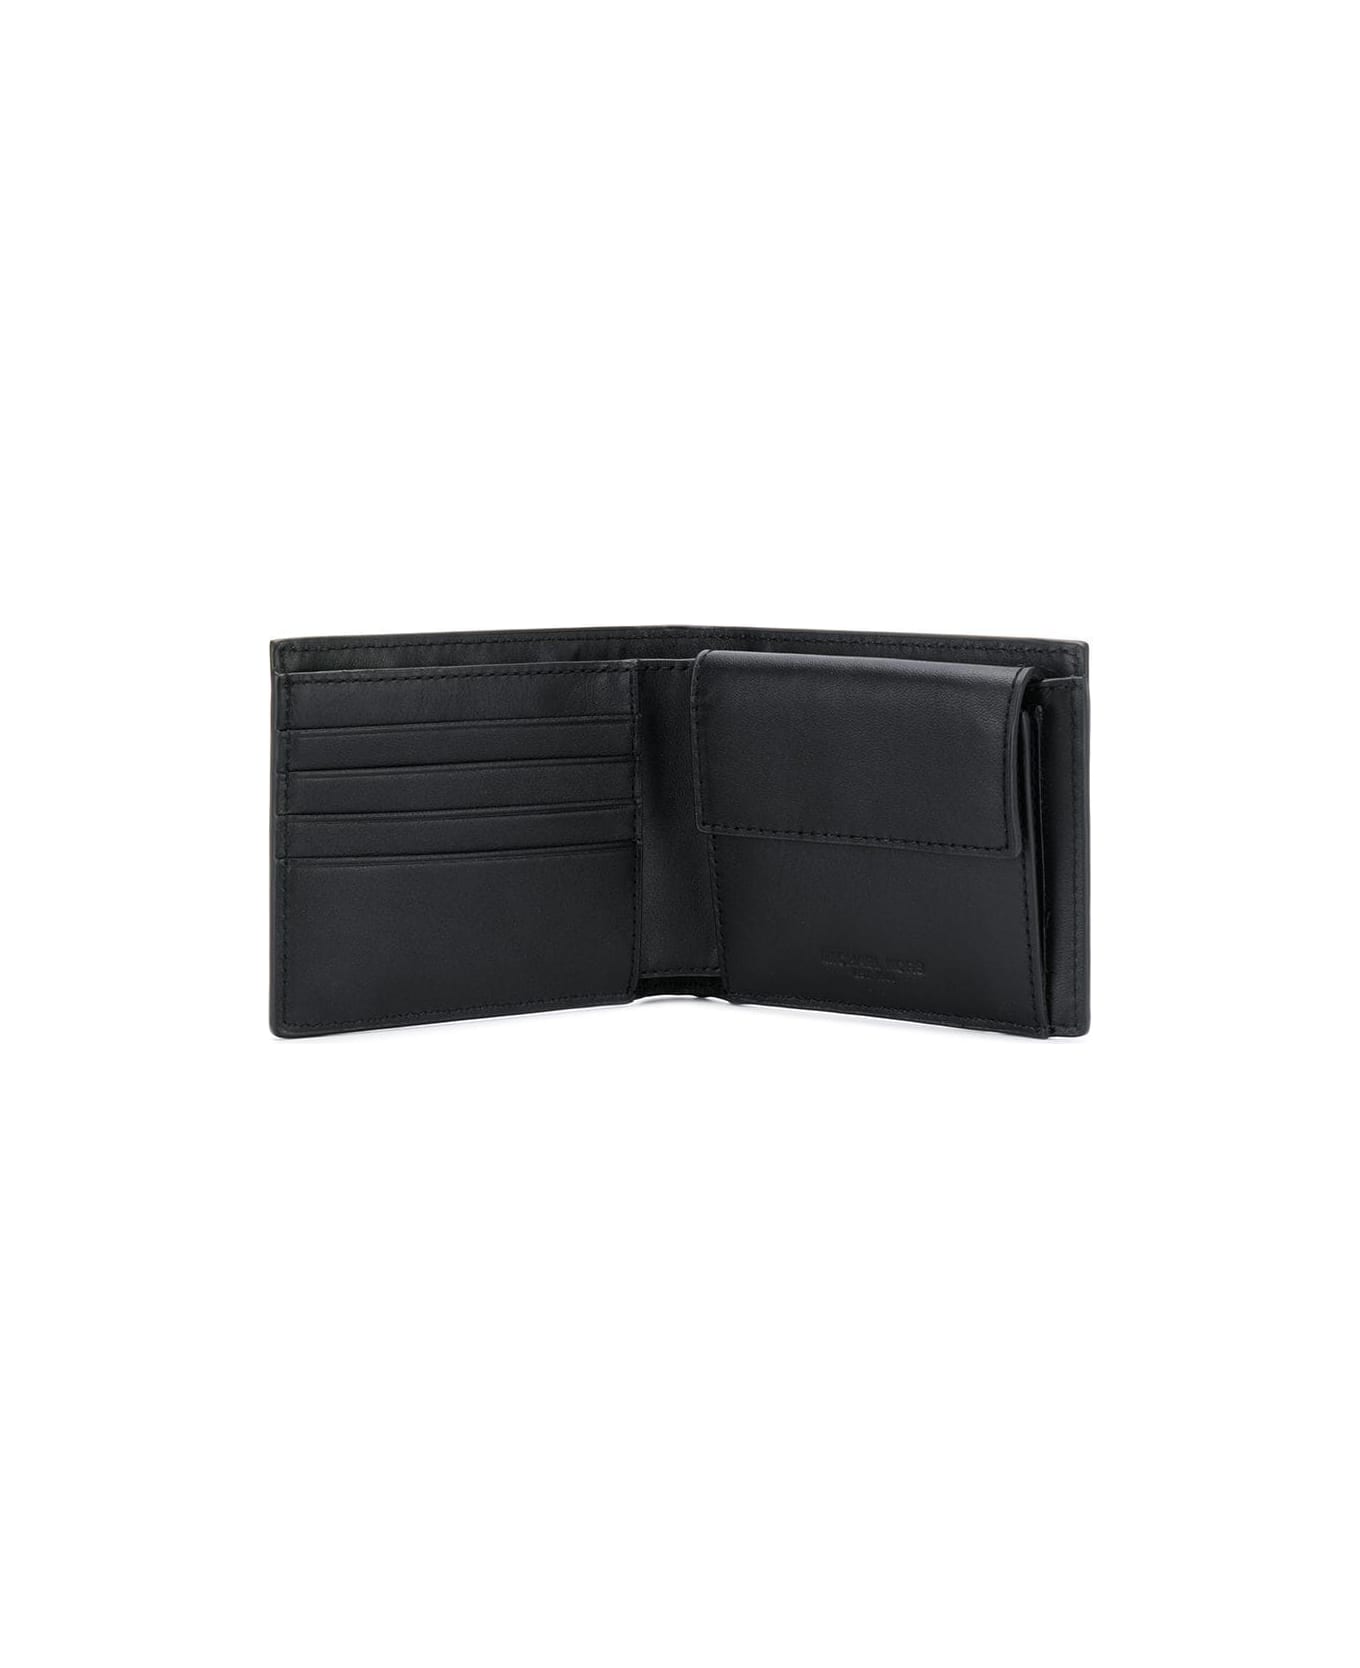 Michael Kors Logo Plaque Bi-fold Wallet - Black 財布